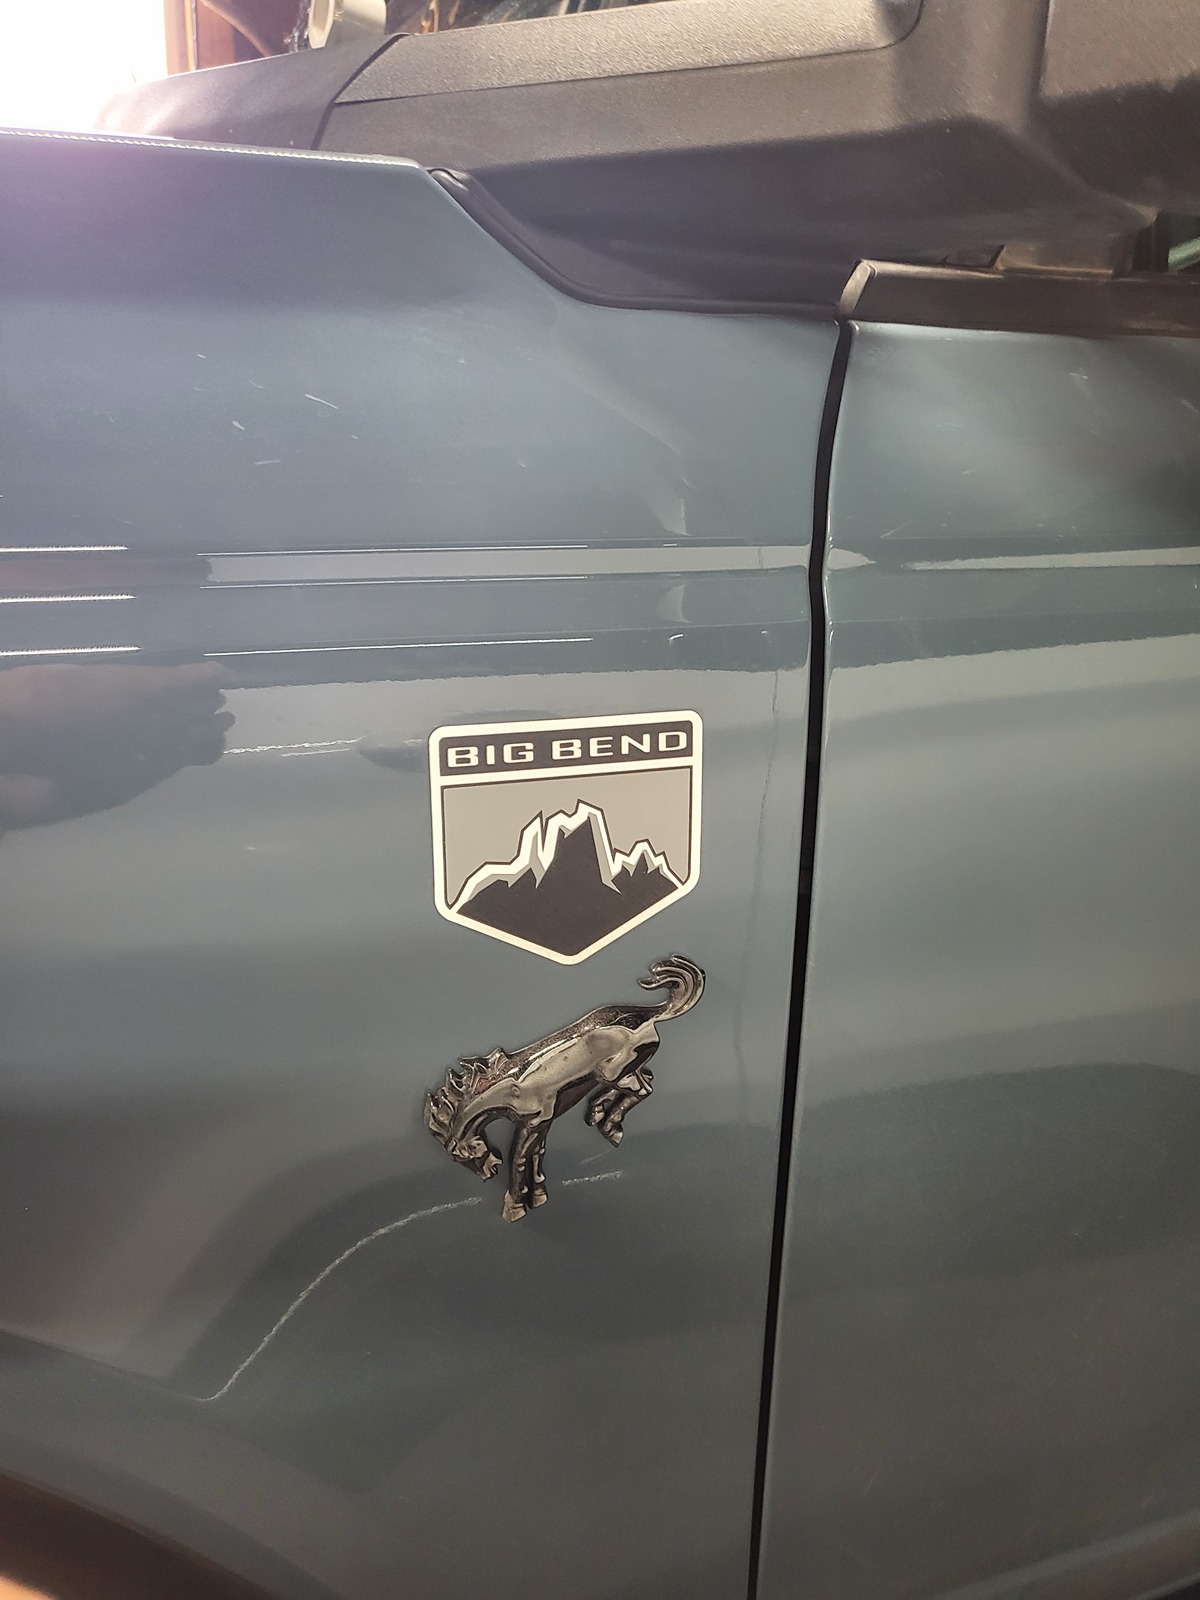 Ford Bronco Bronco Horse Emblem - where to place? 17119207627417015347731330293980